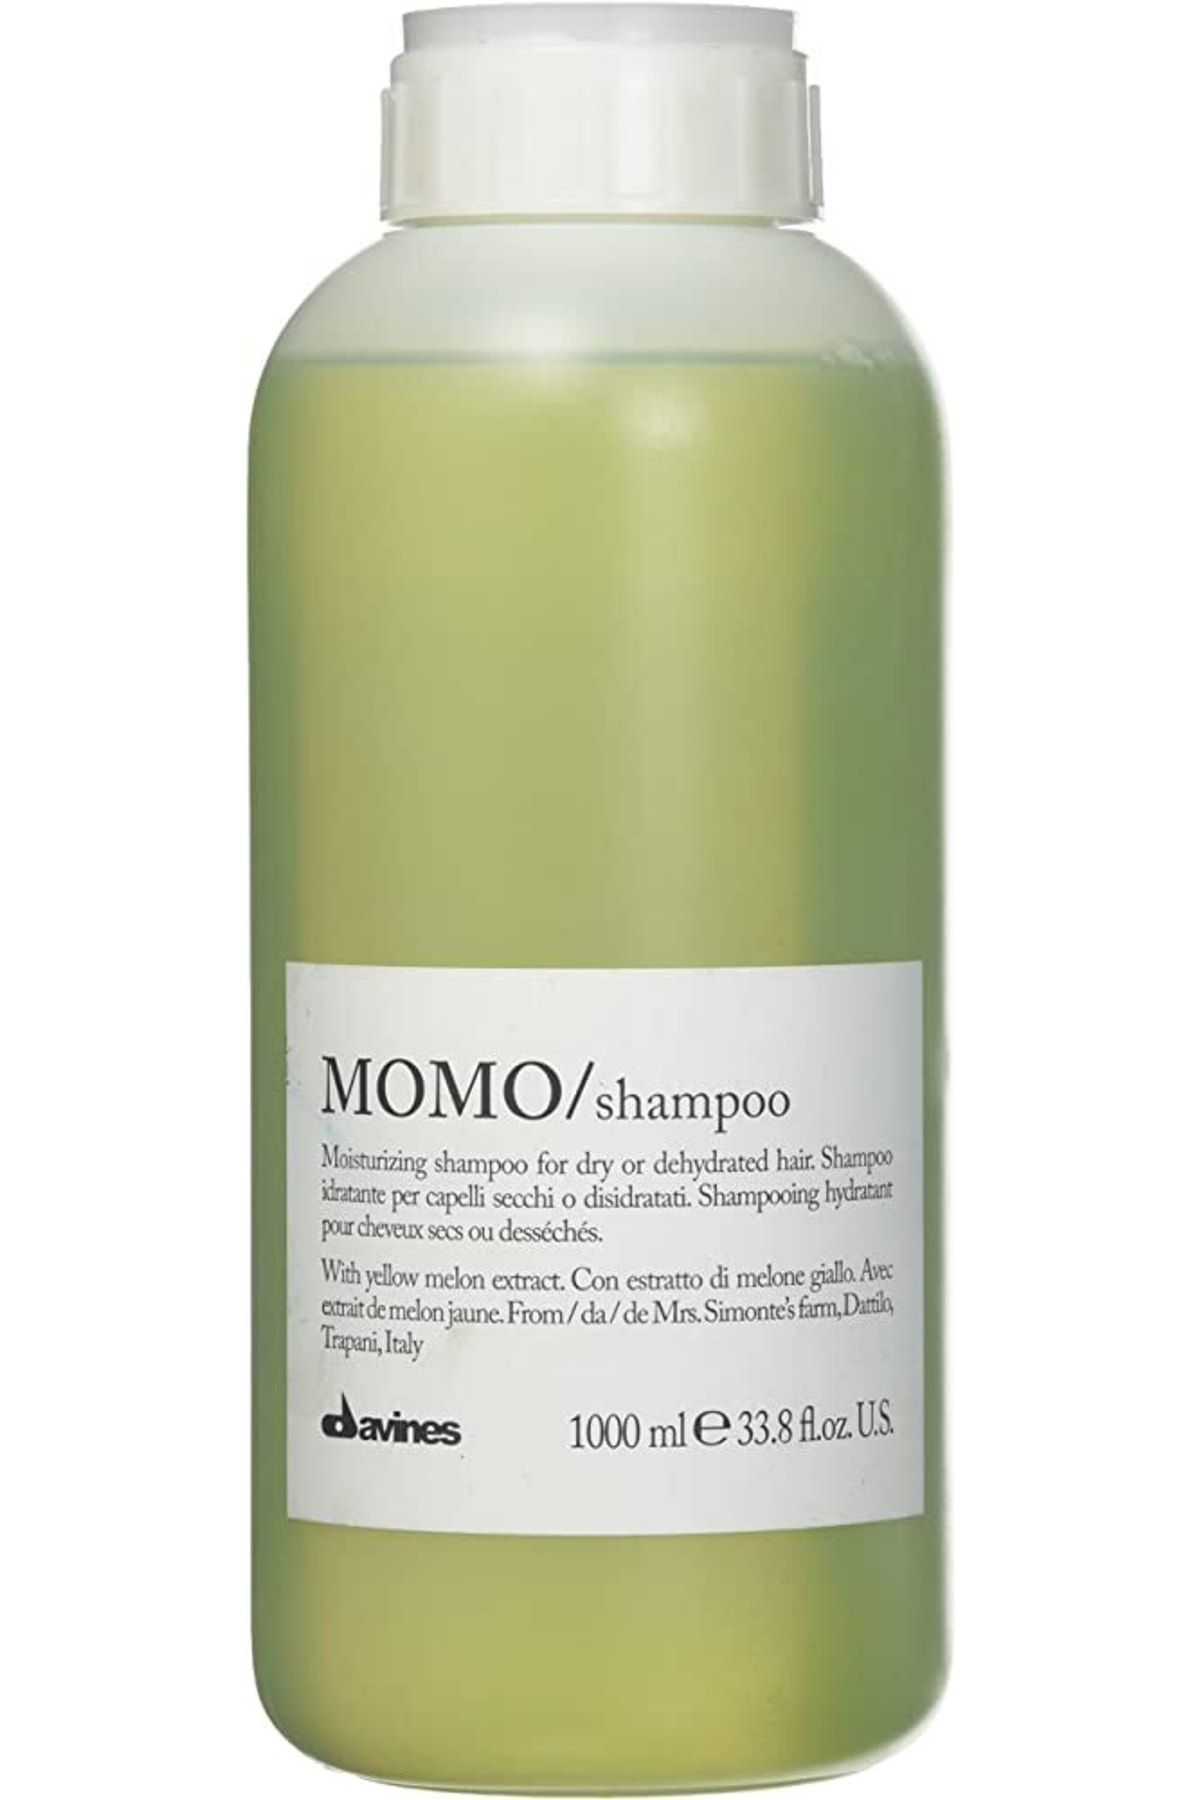 Davines KRASOTA Momo Hydrating Shampoo Özel Nem Serisi Şampuan 1000ml 78004608242116. 5012 KR.8345.P150